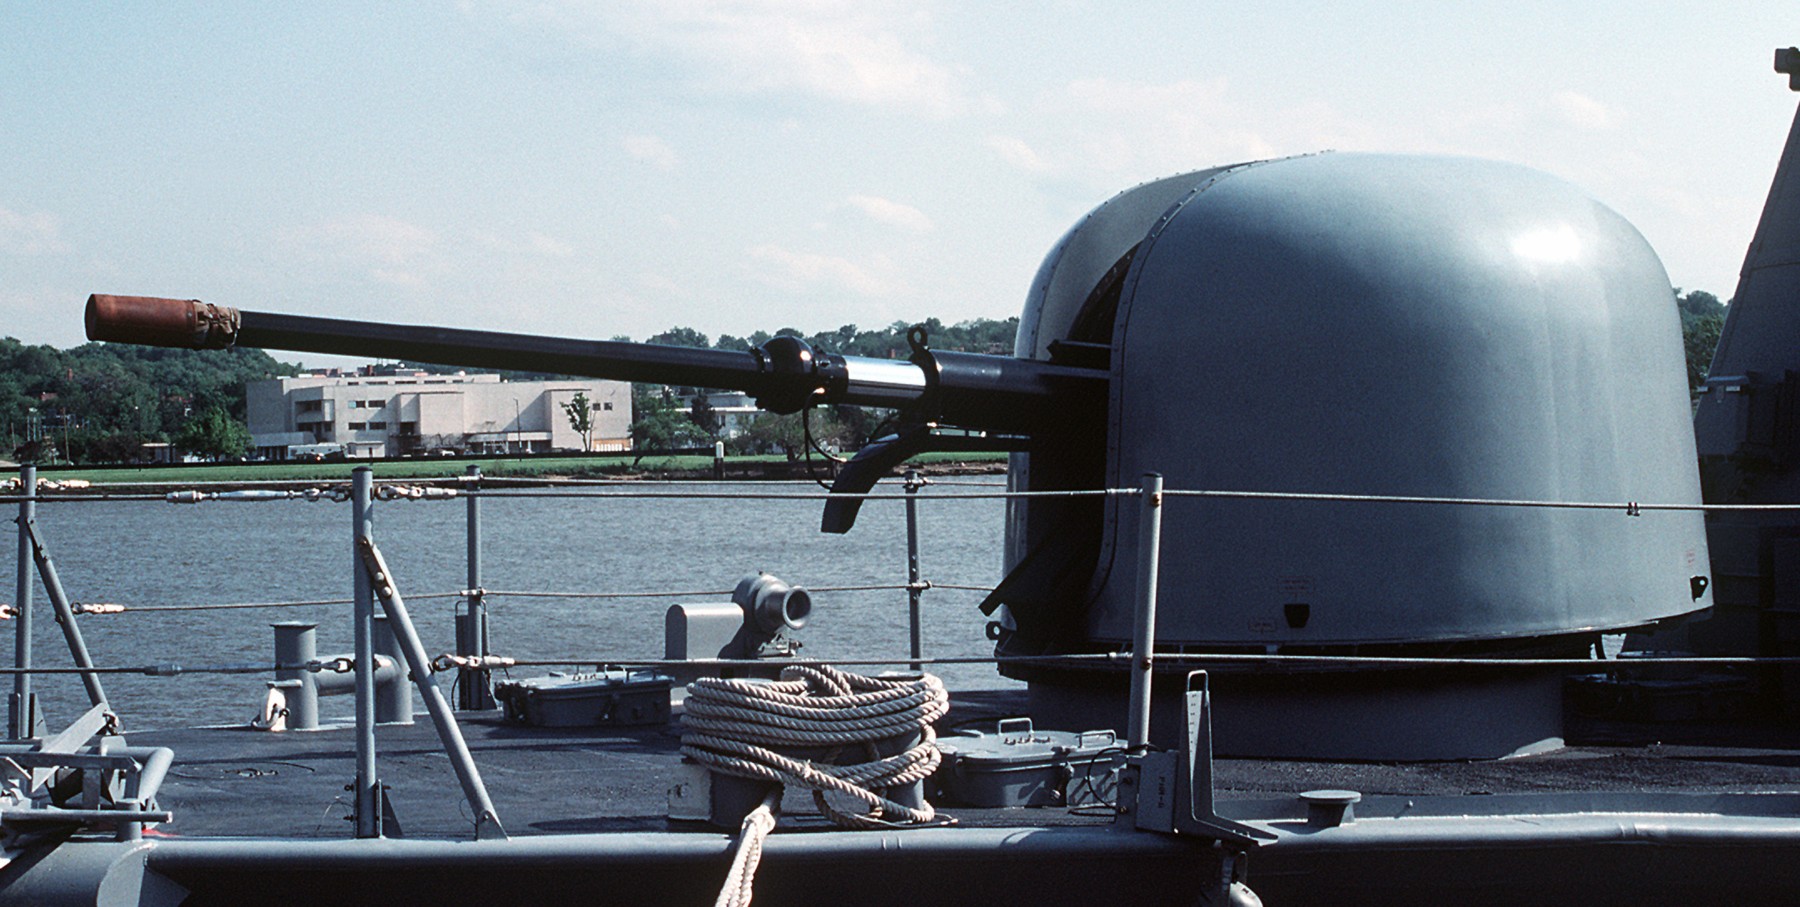 mk-75 3" gun 76mm pegasus class phm us navy